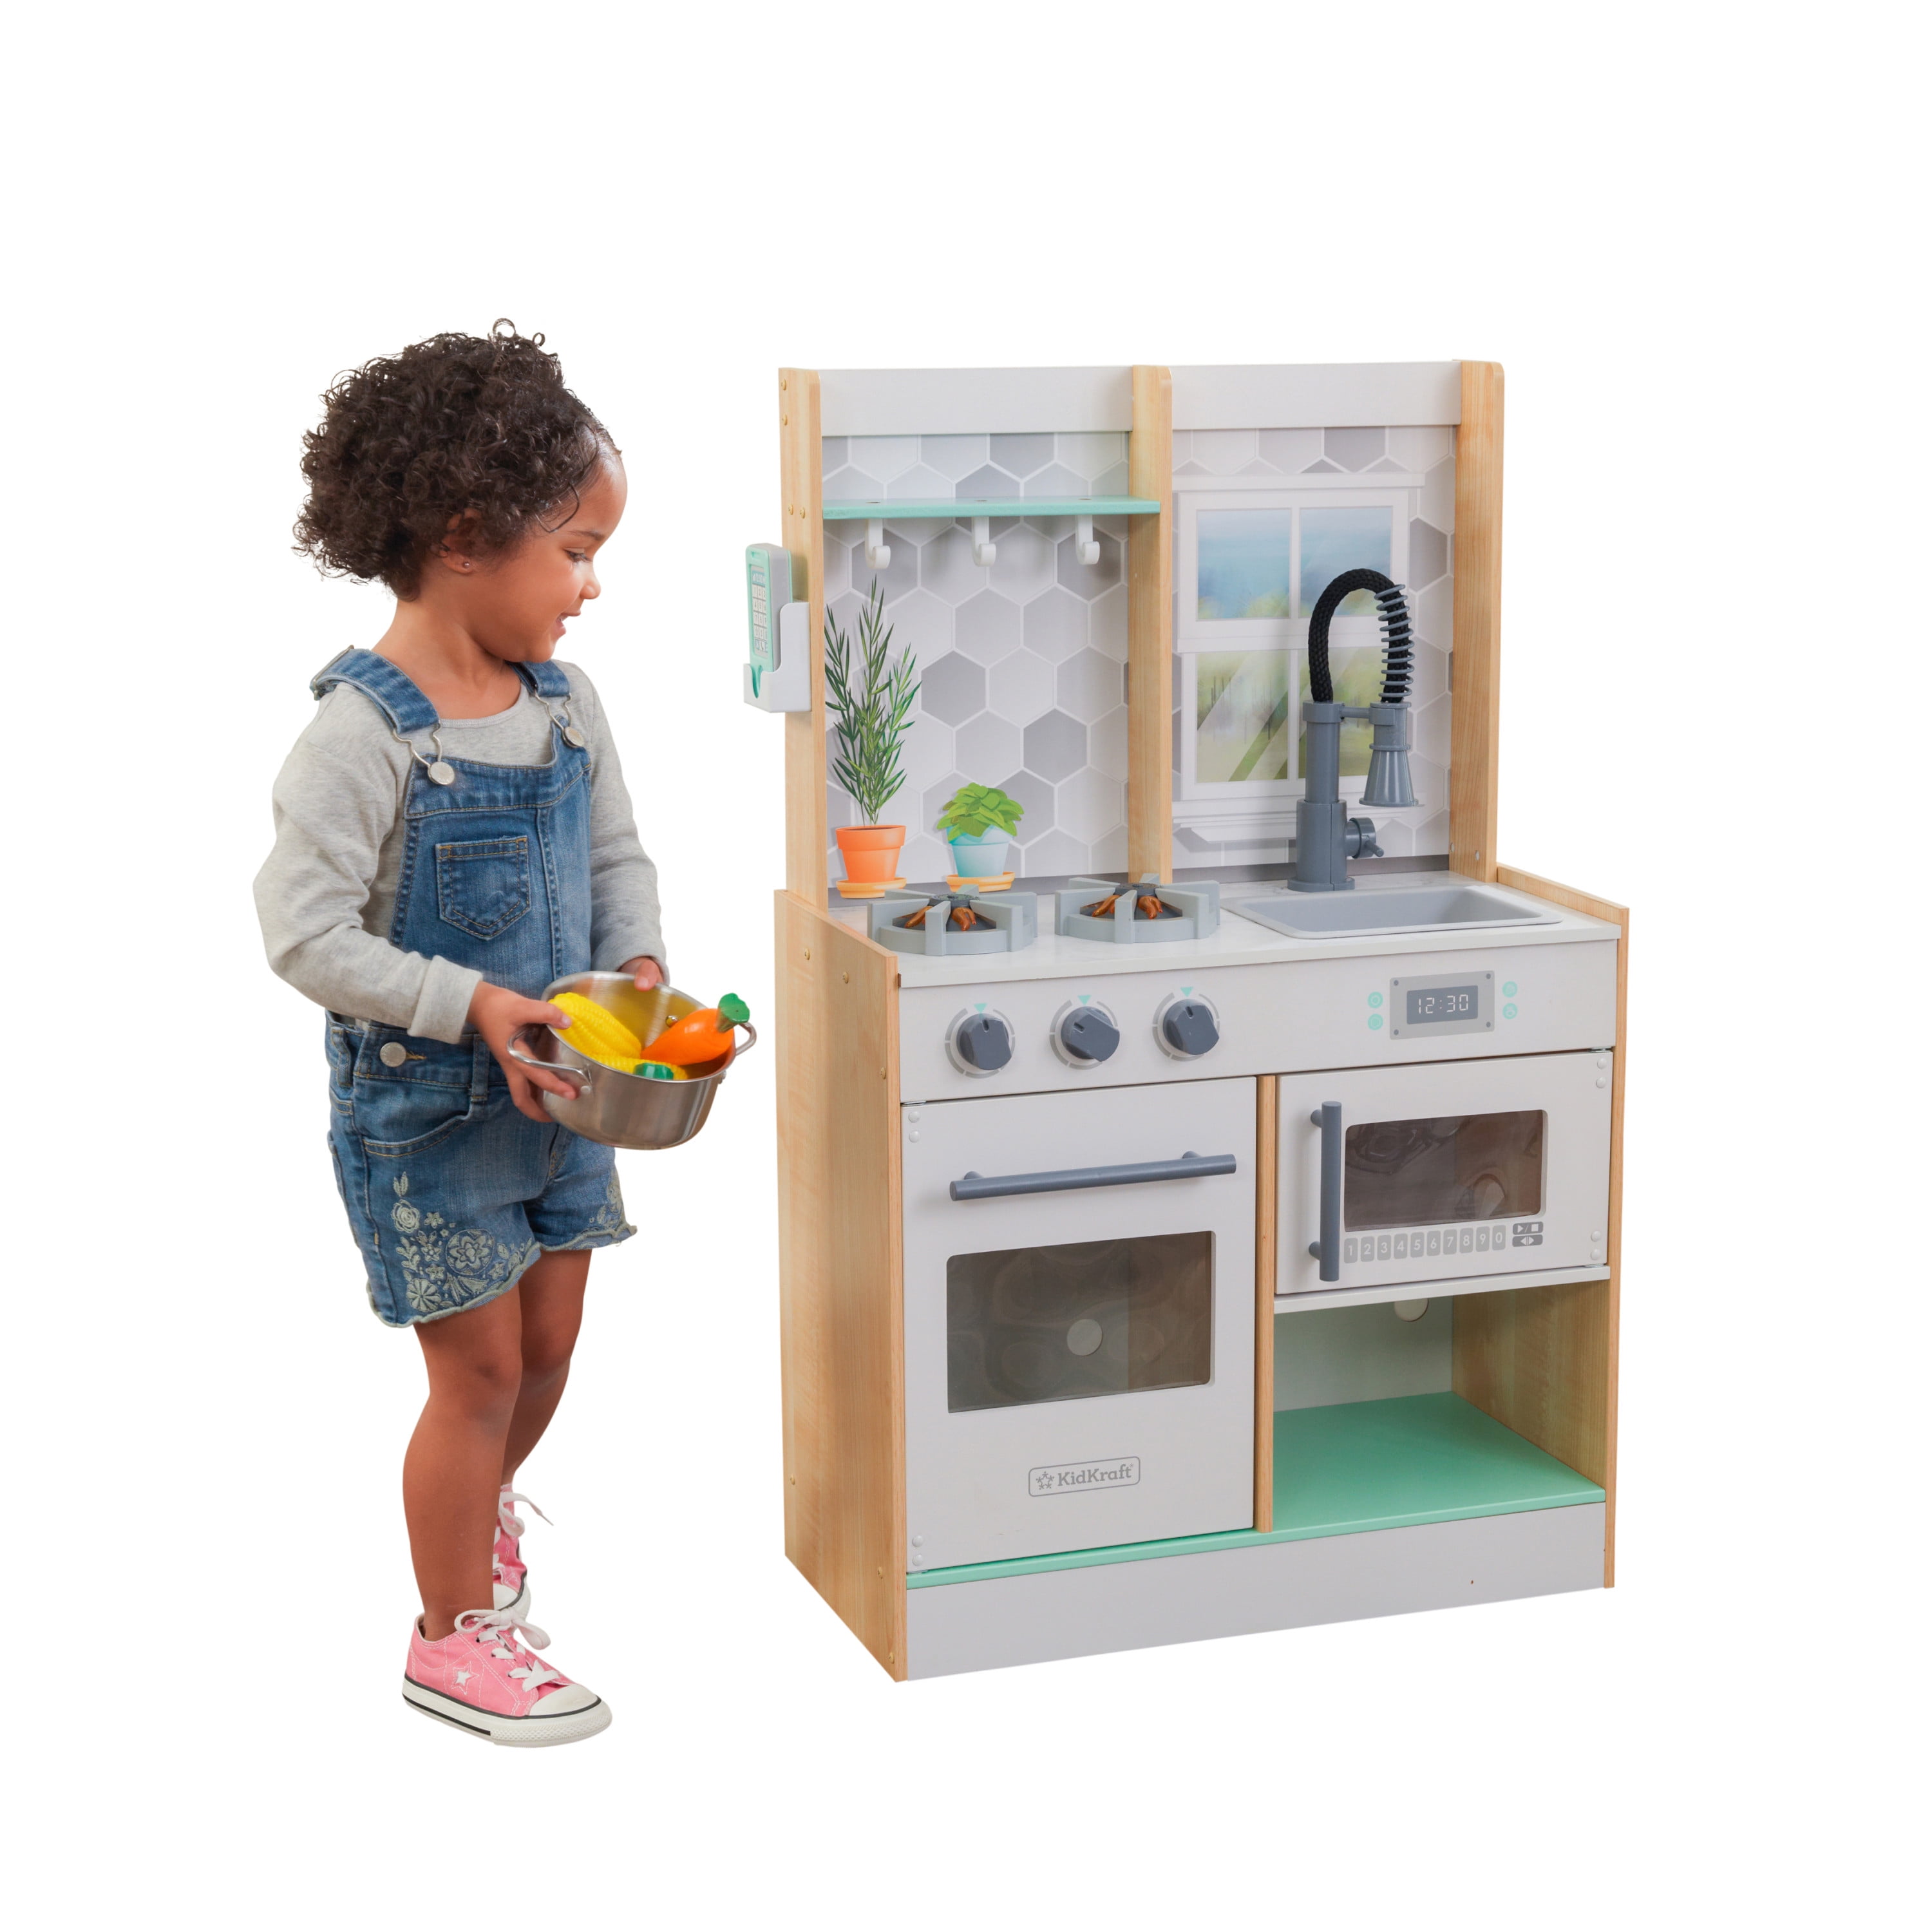 Christmas Children Gift Play Kitchen Home Appliances Kid Pretend Toy Cooking Fun 